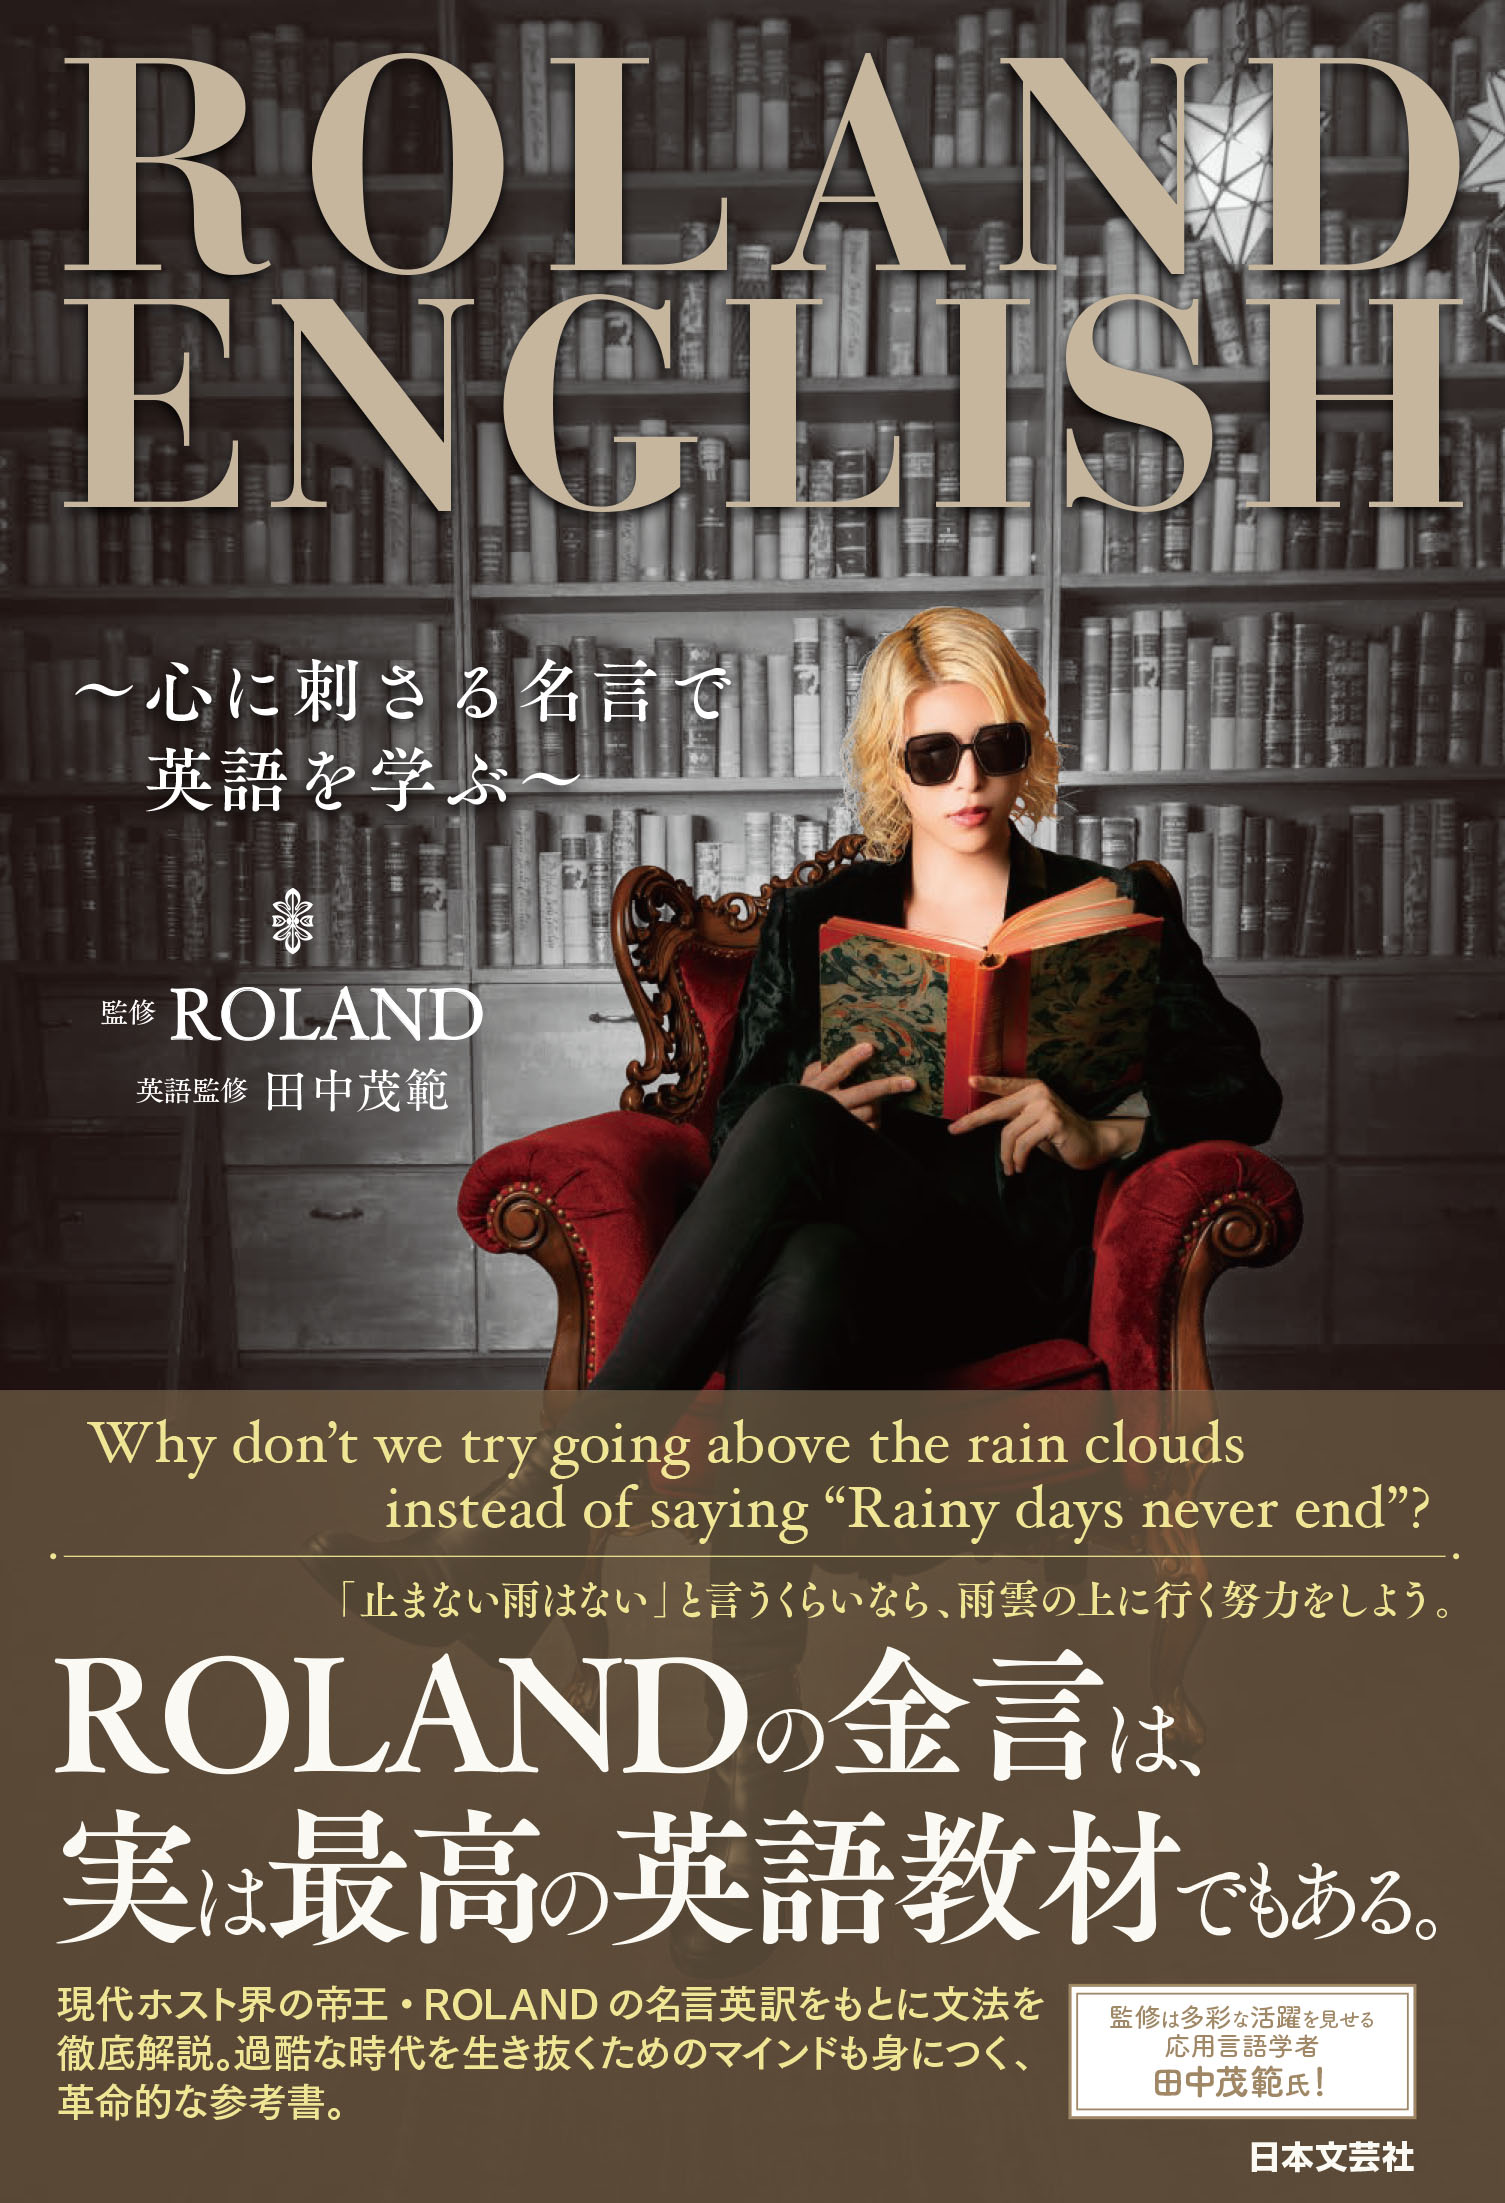 ROLAND　ENGLISHの商品画像